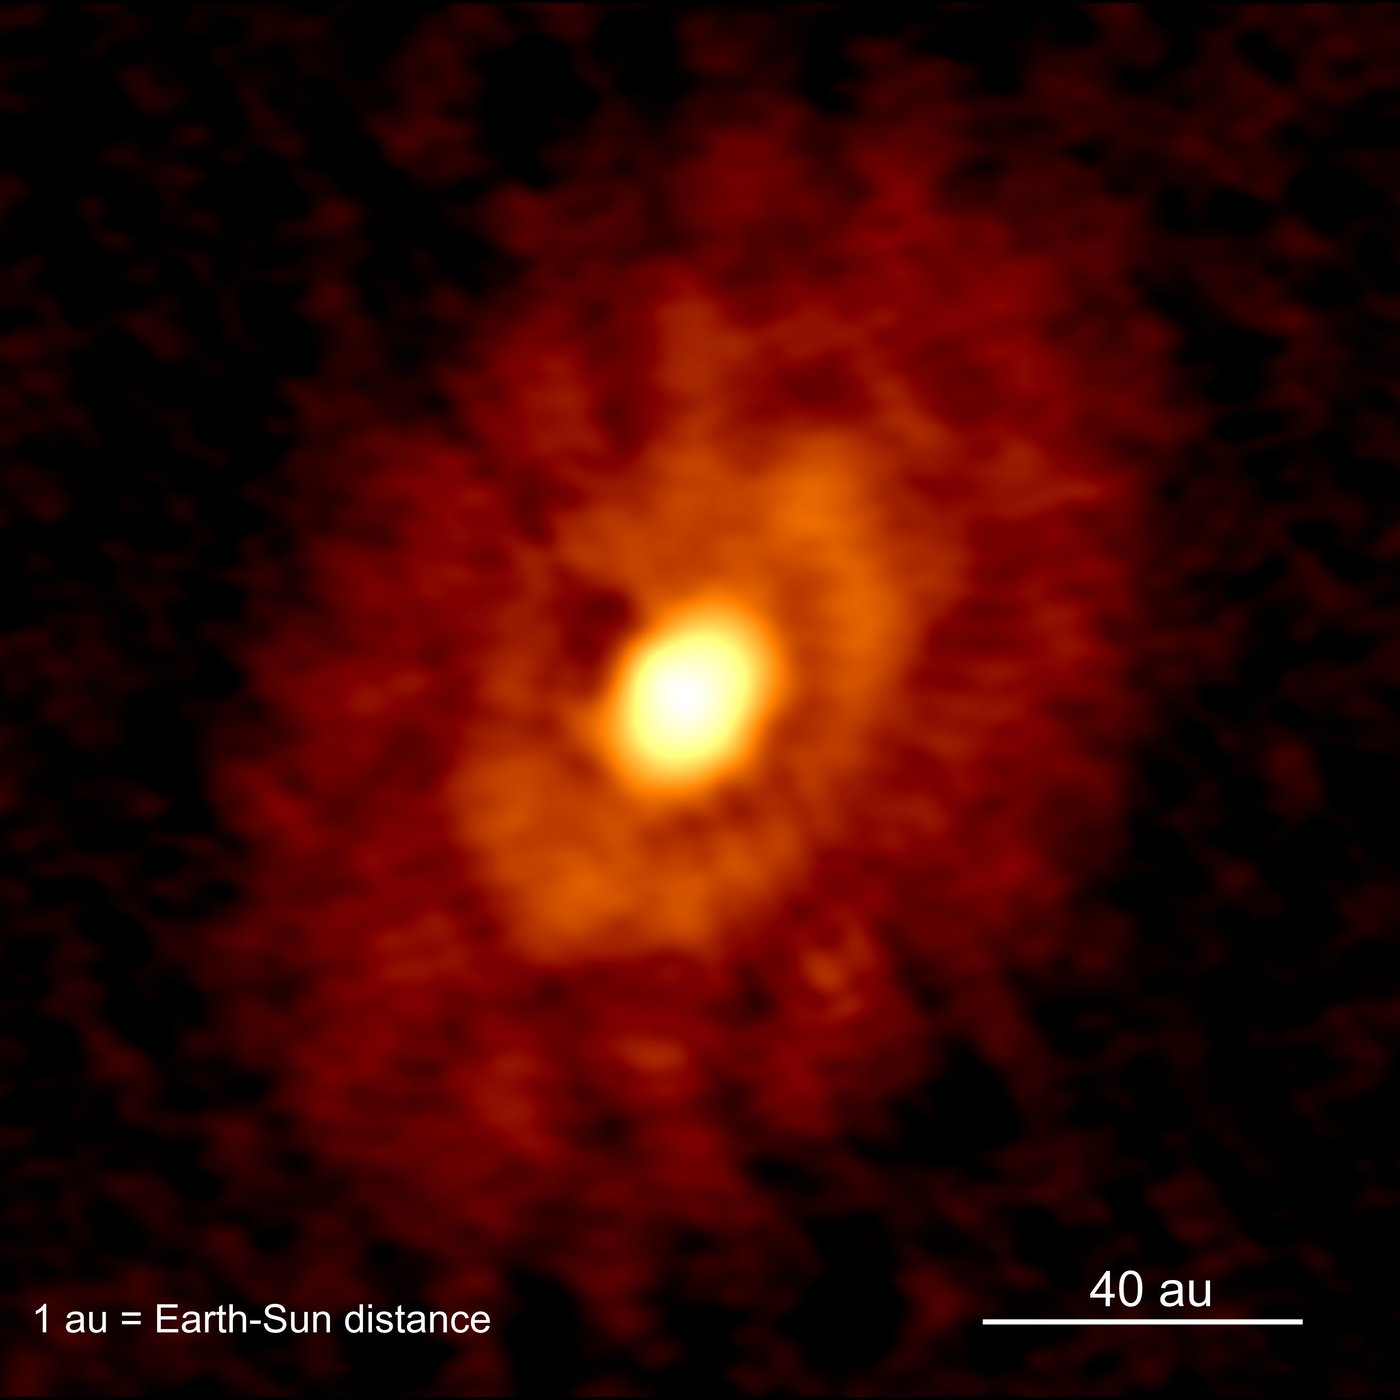 ALMAが撮影したIRS63原始星を取り巻く若い惑星形成ダストリング。